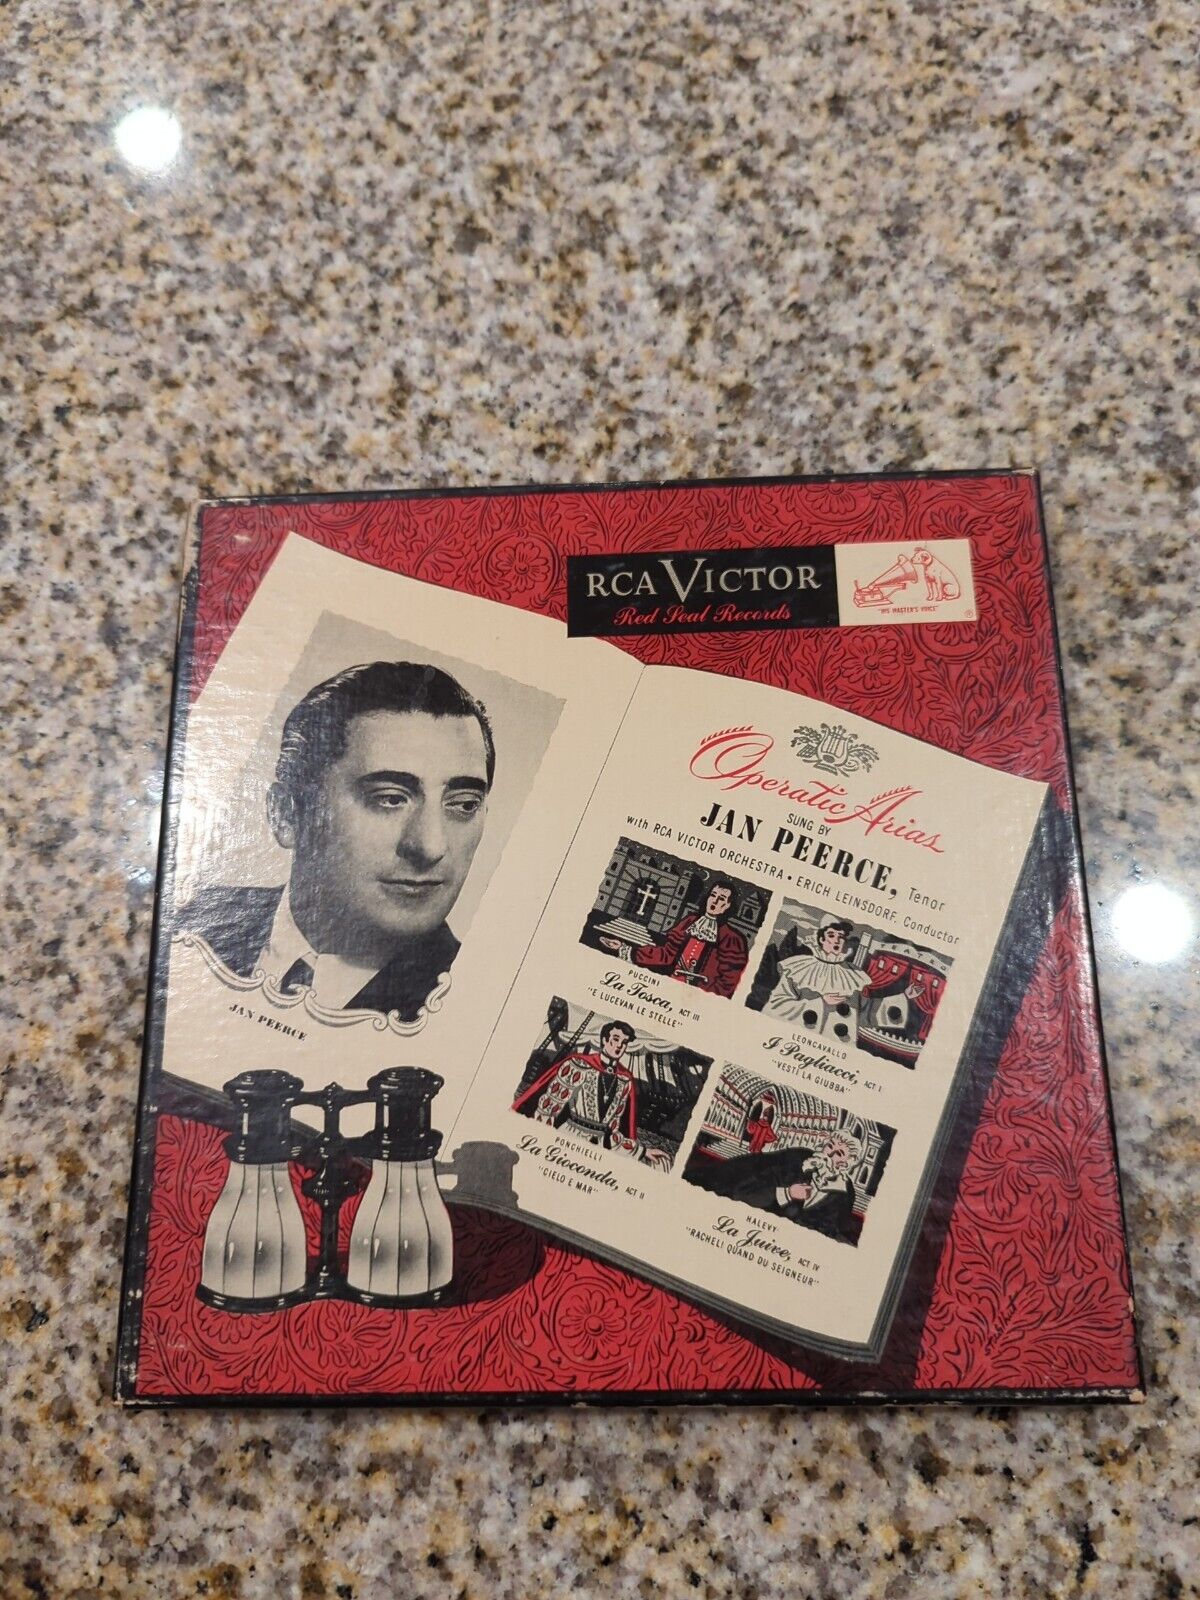 2 RCA Victor Red Seal Records Jan Peerce Operatic Arias 45 RPM Red Vinyl Italian